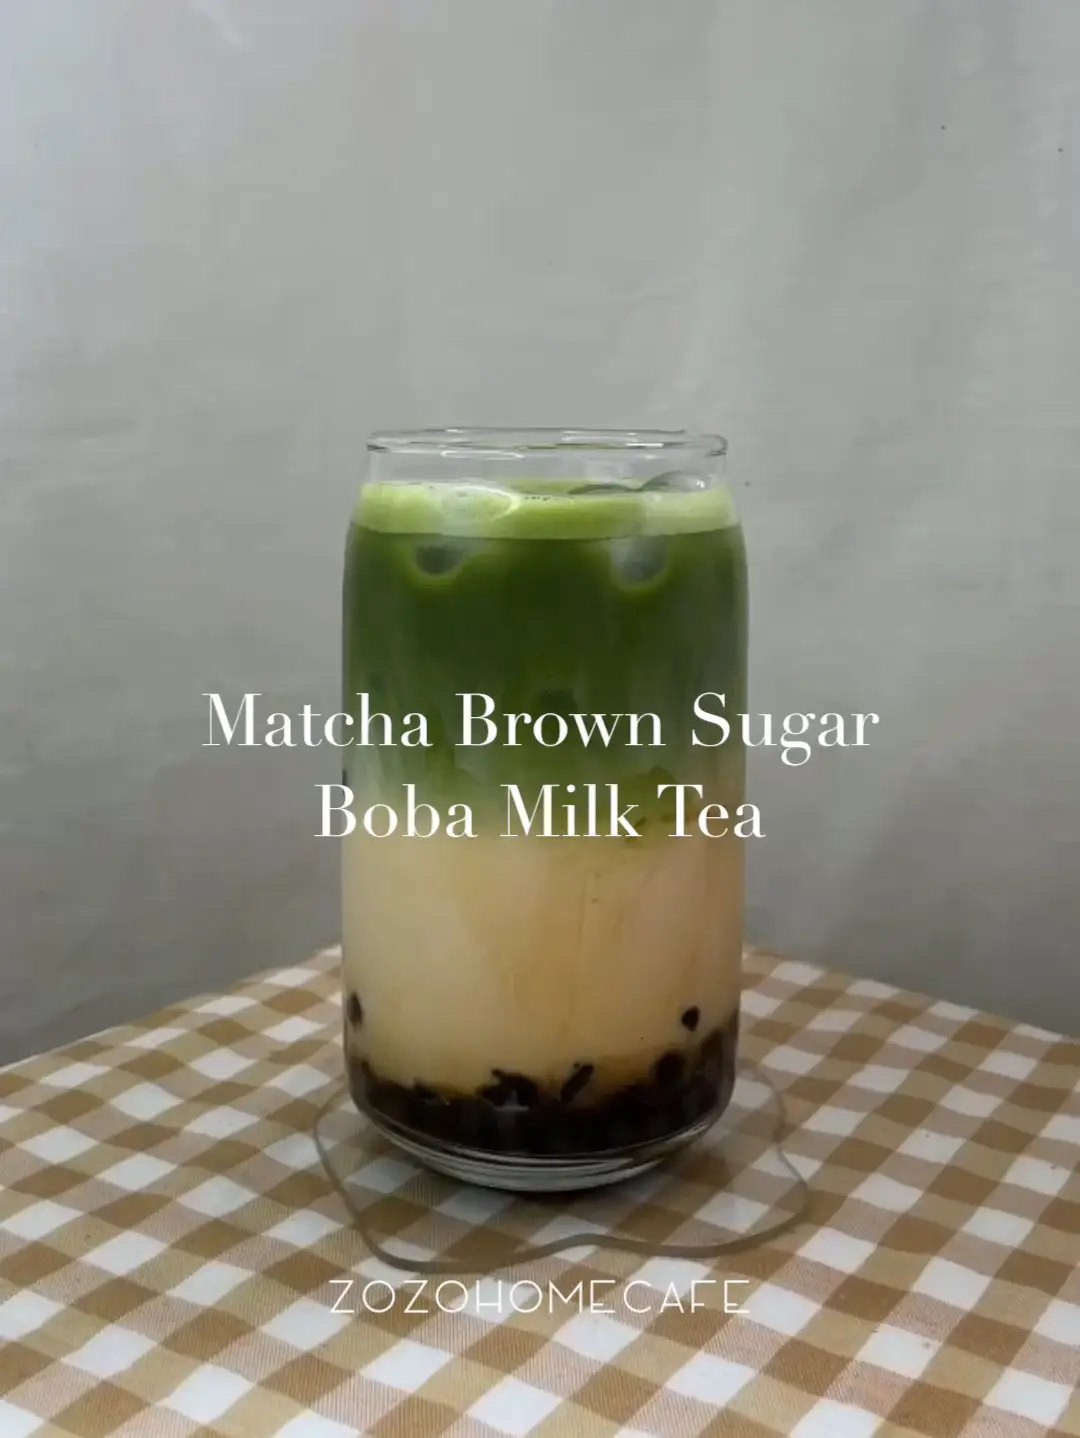 Brown Sugar Matcha Bubble Tea